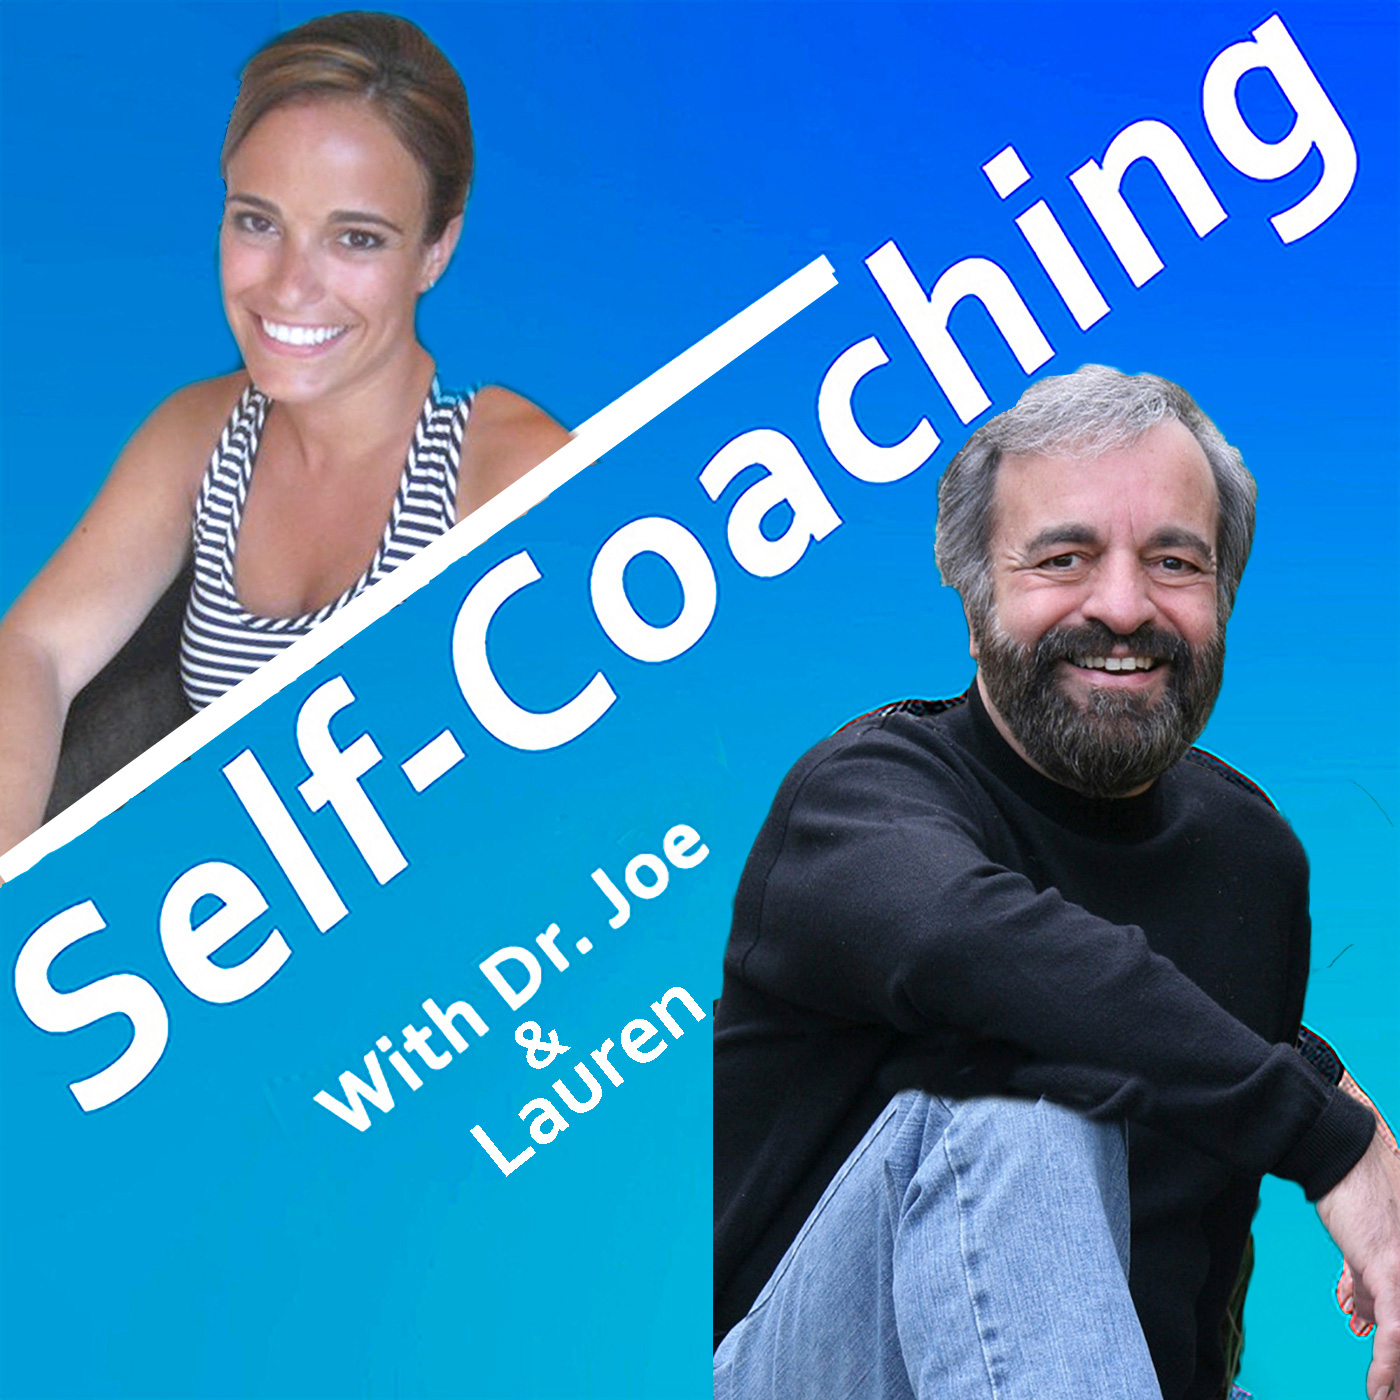 Self-Coaching